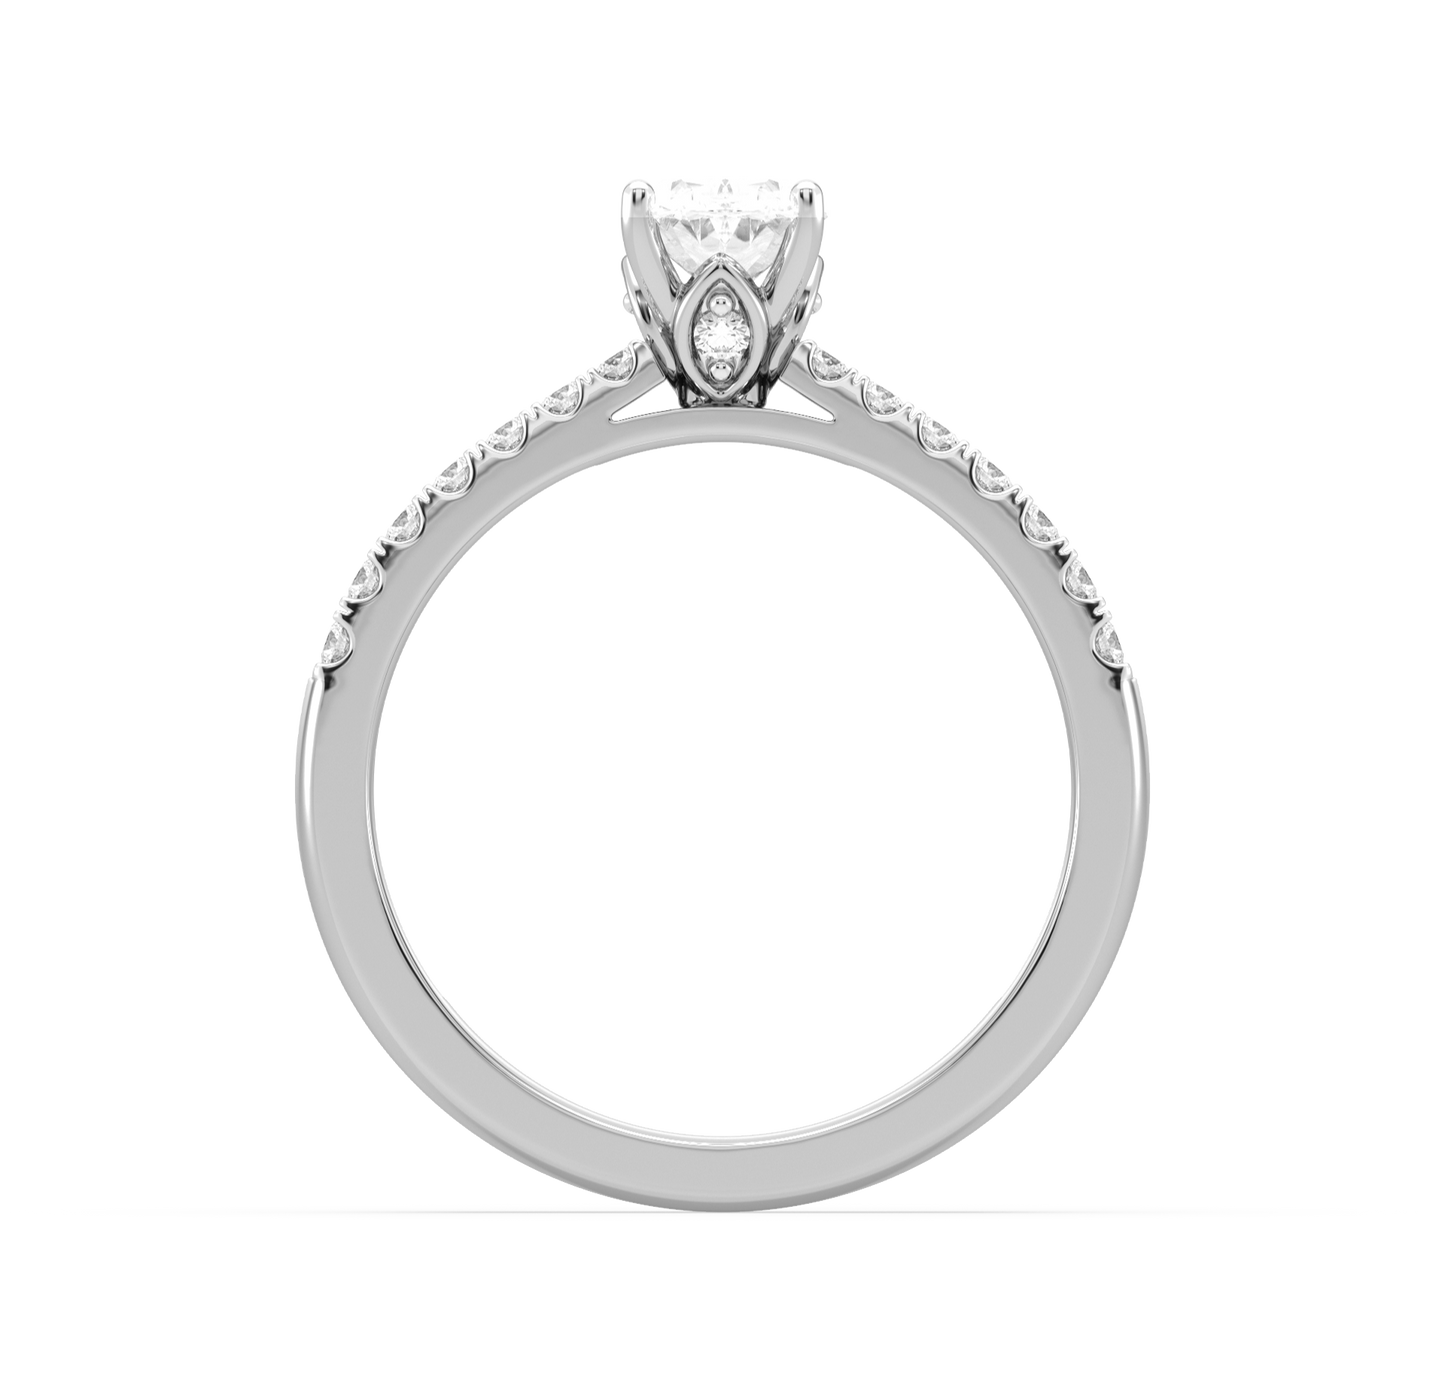 Customised ring RG21011-PH21028